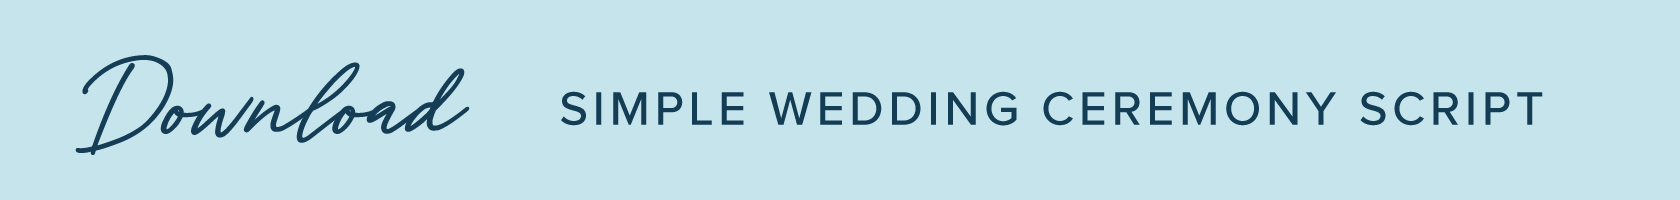 simple-wedding-ceremony-script-button